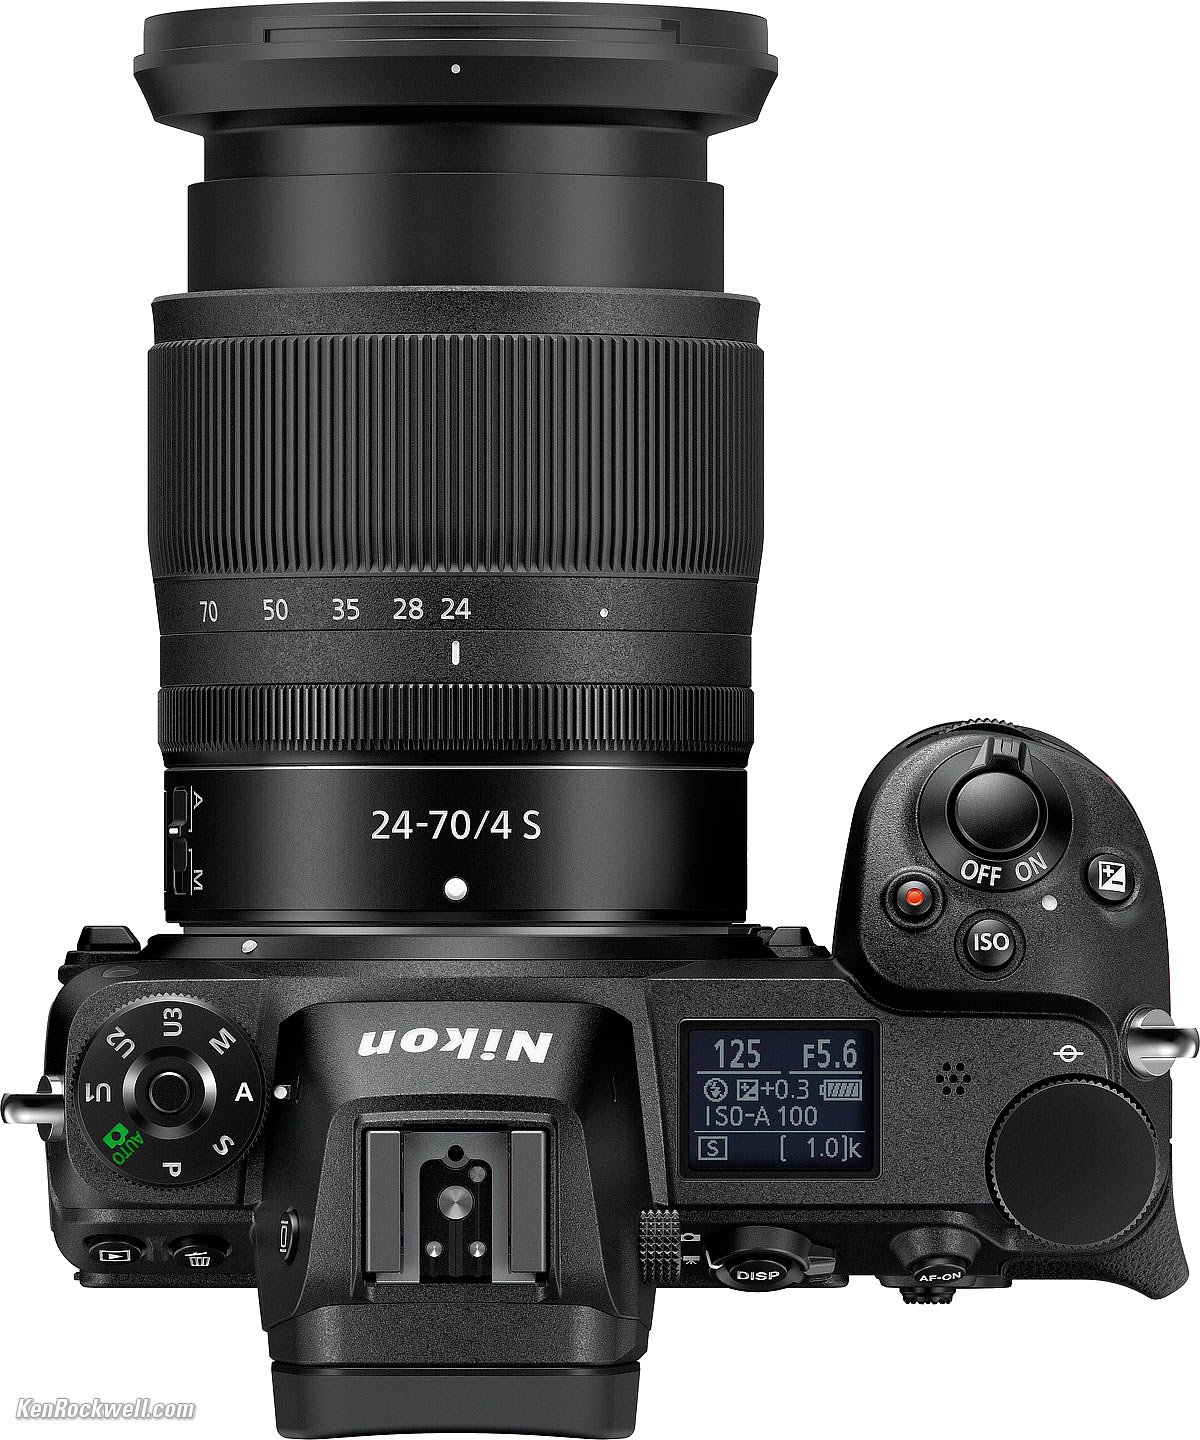 Nikon 24-70mm f/4 S Review